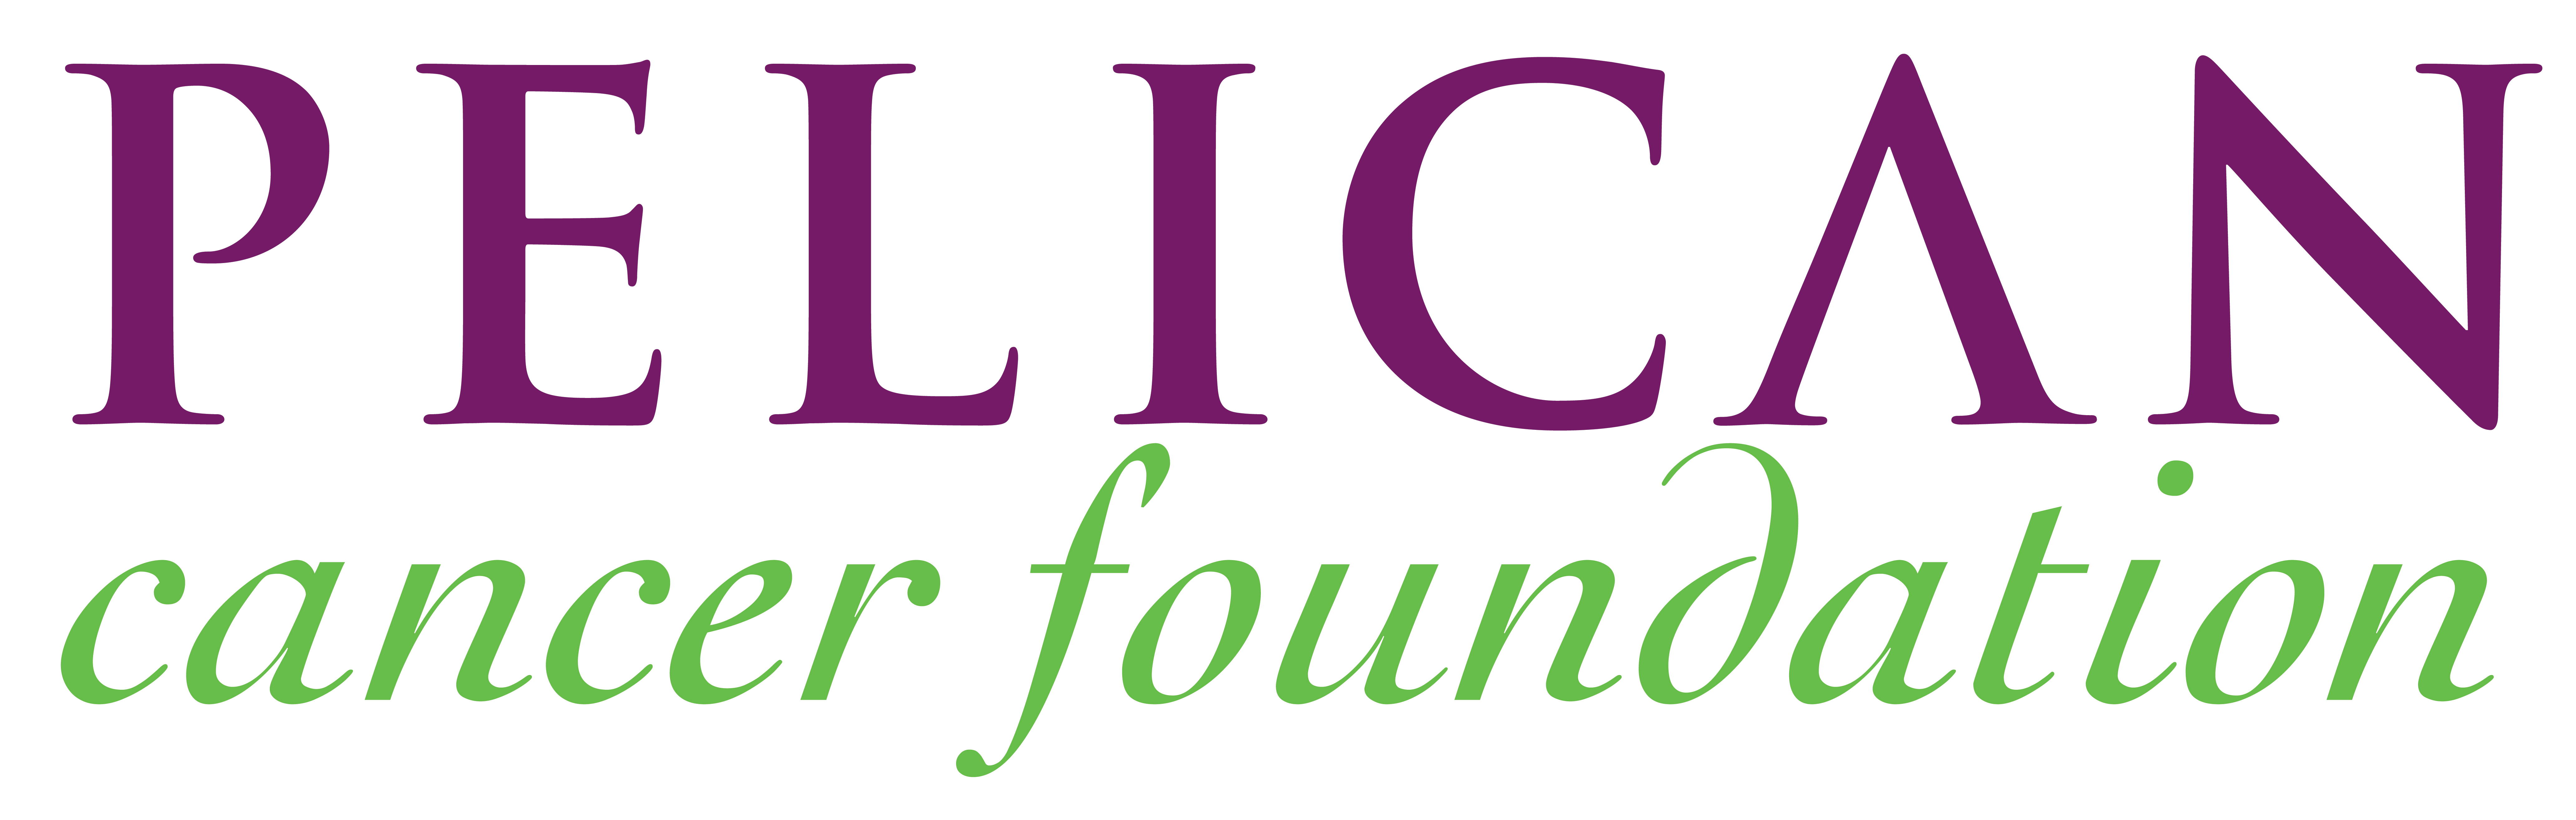 Pelican Cancer Foundation - logo